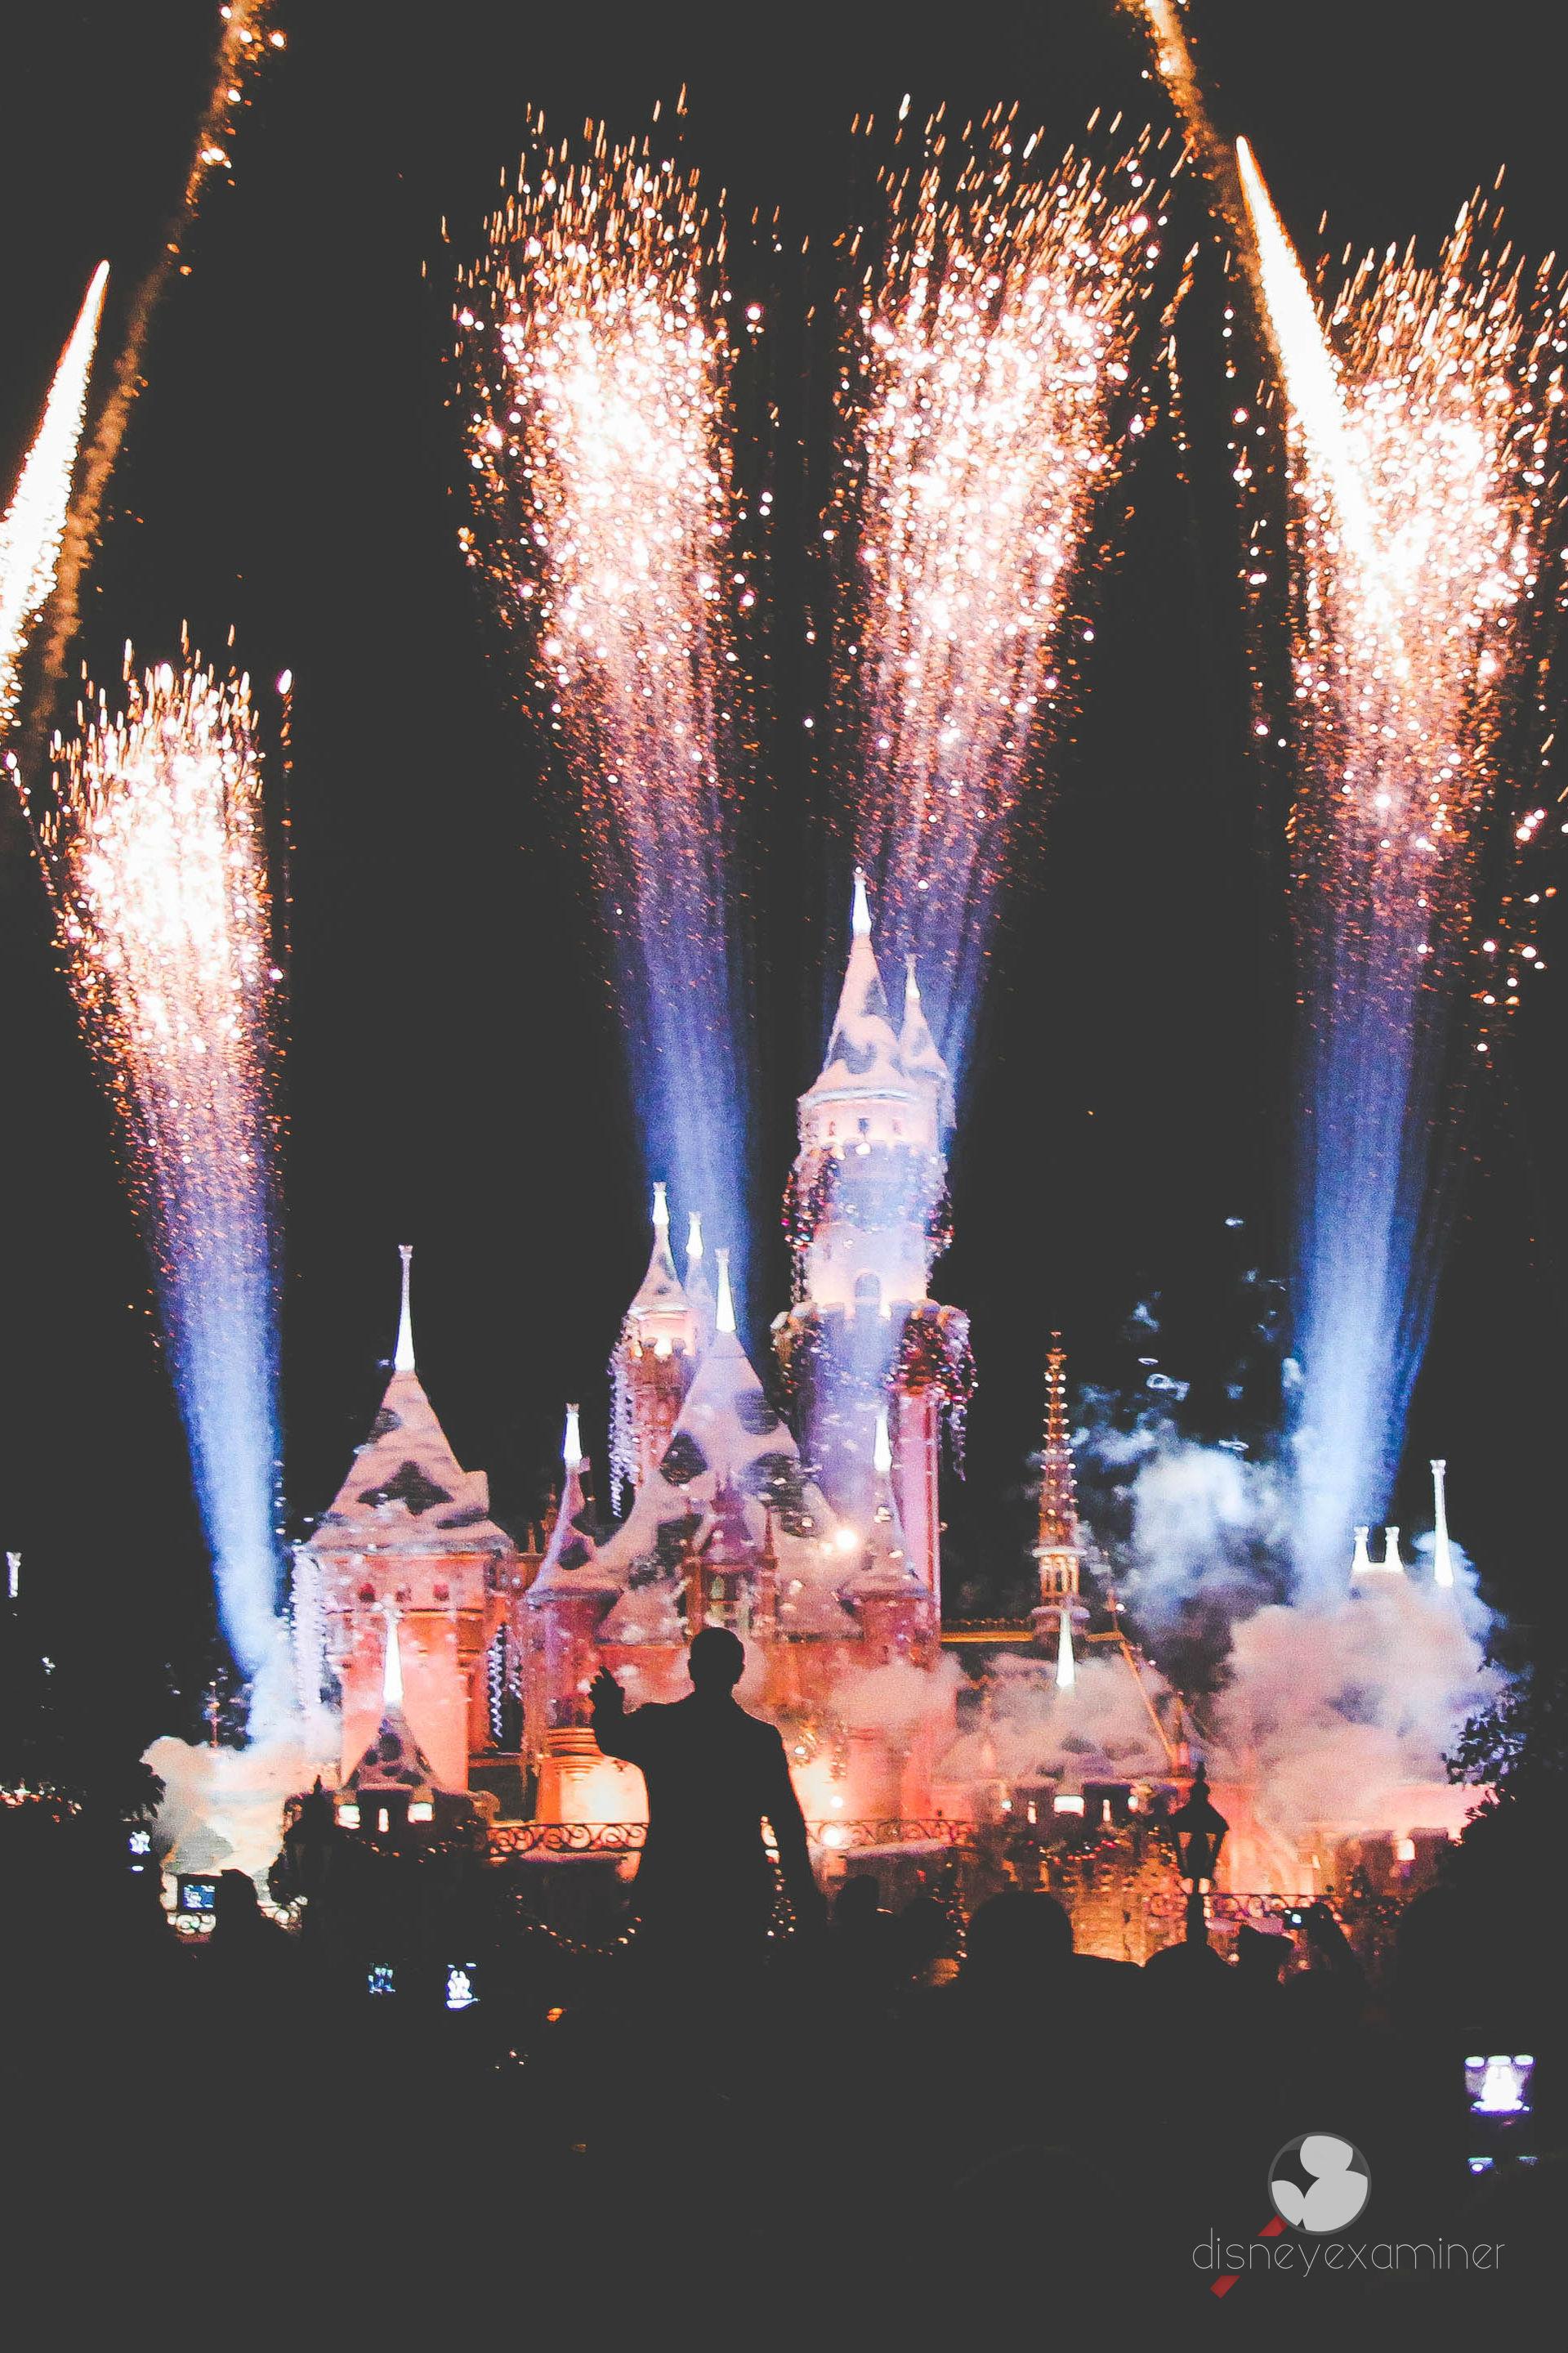 Fireworks light up the sky over Disneyland's castle. - Disneyland